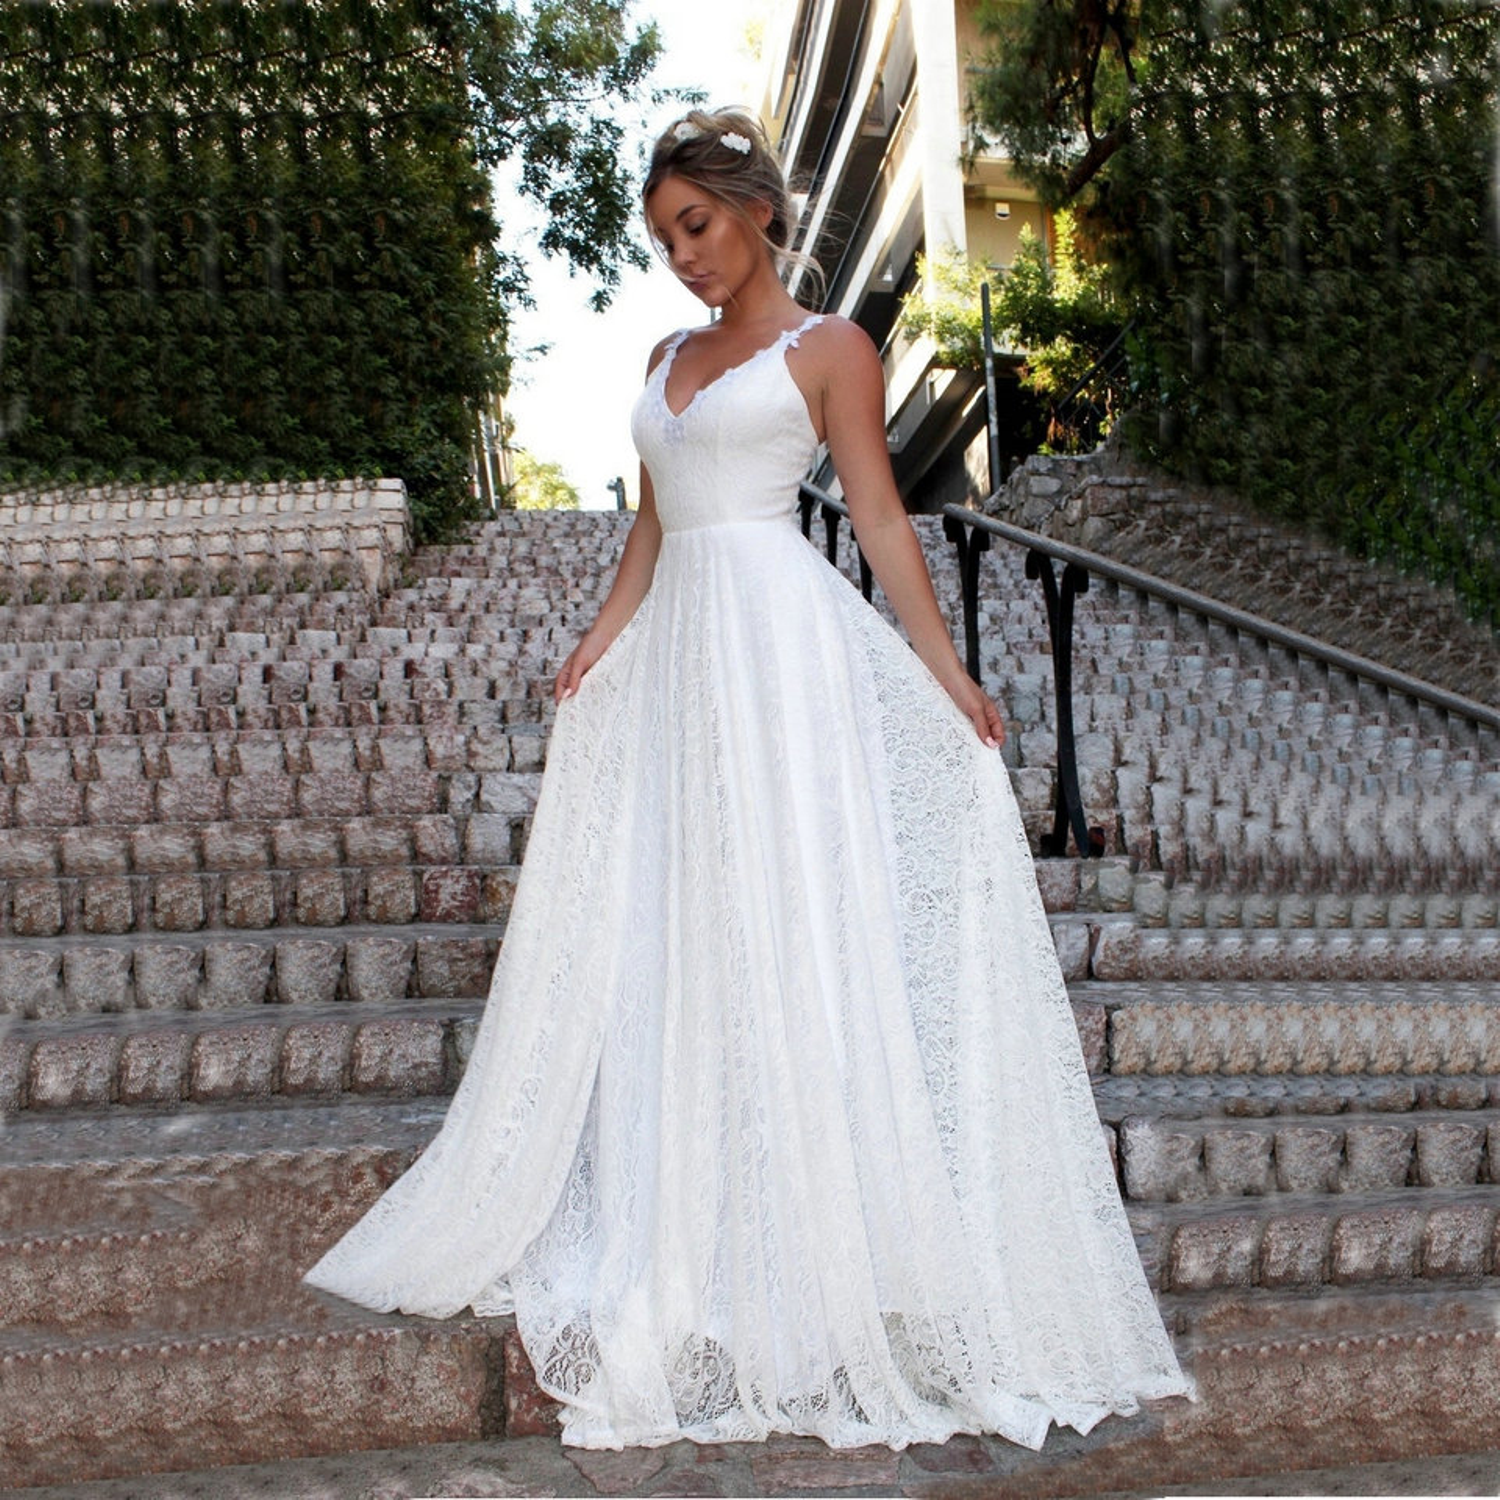 Lace A-line wedding dress